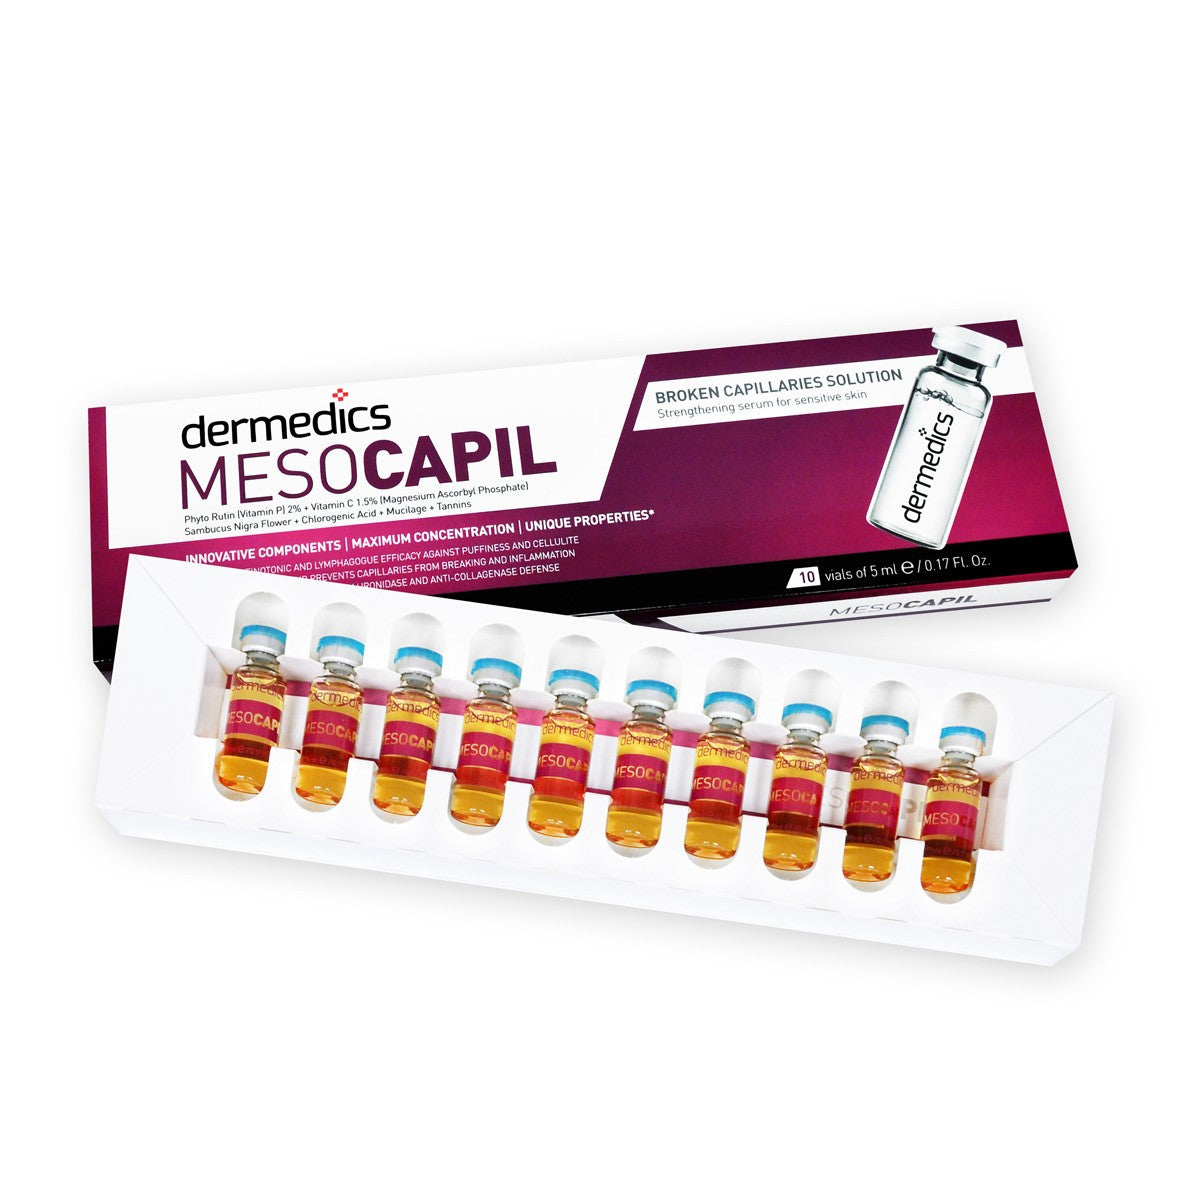 Dermedics - MESOCAPIL Broken Capillaries Solution